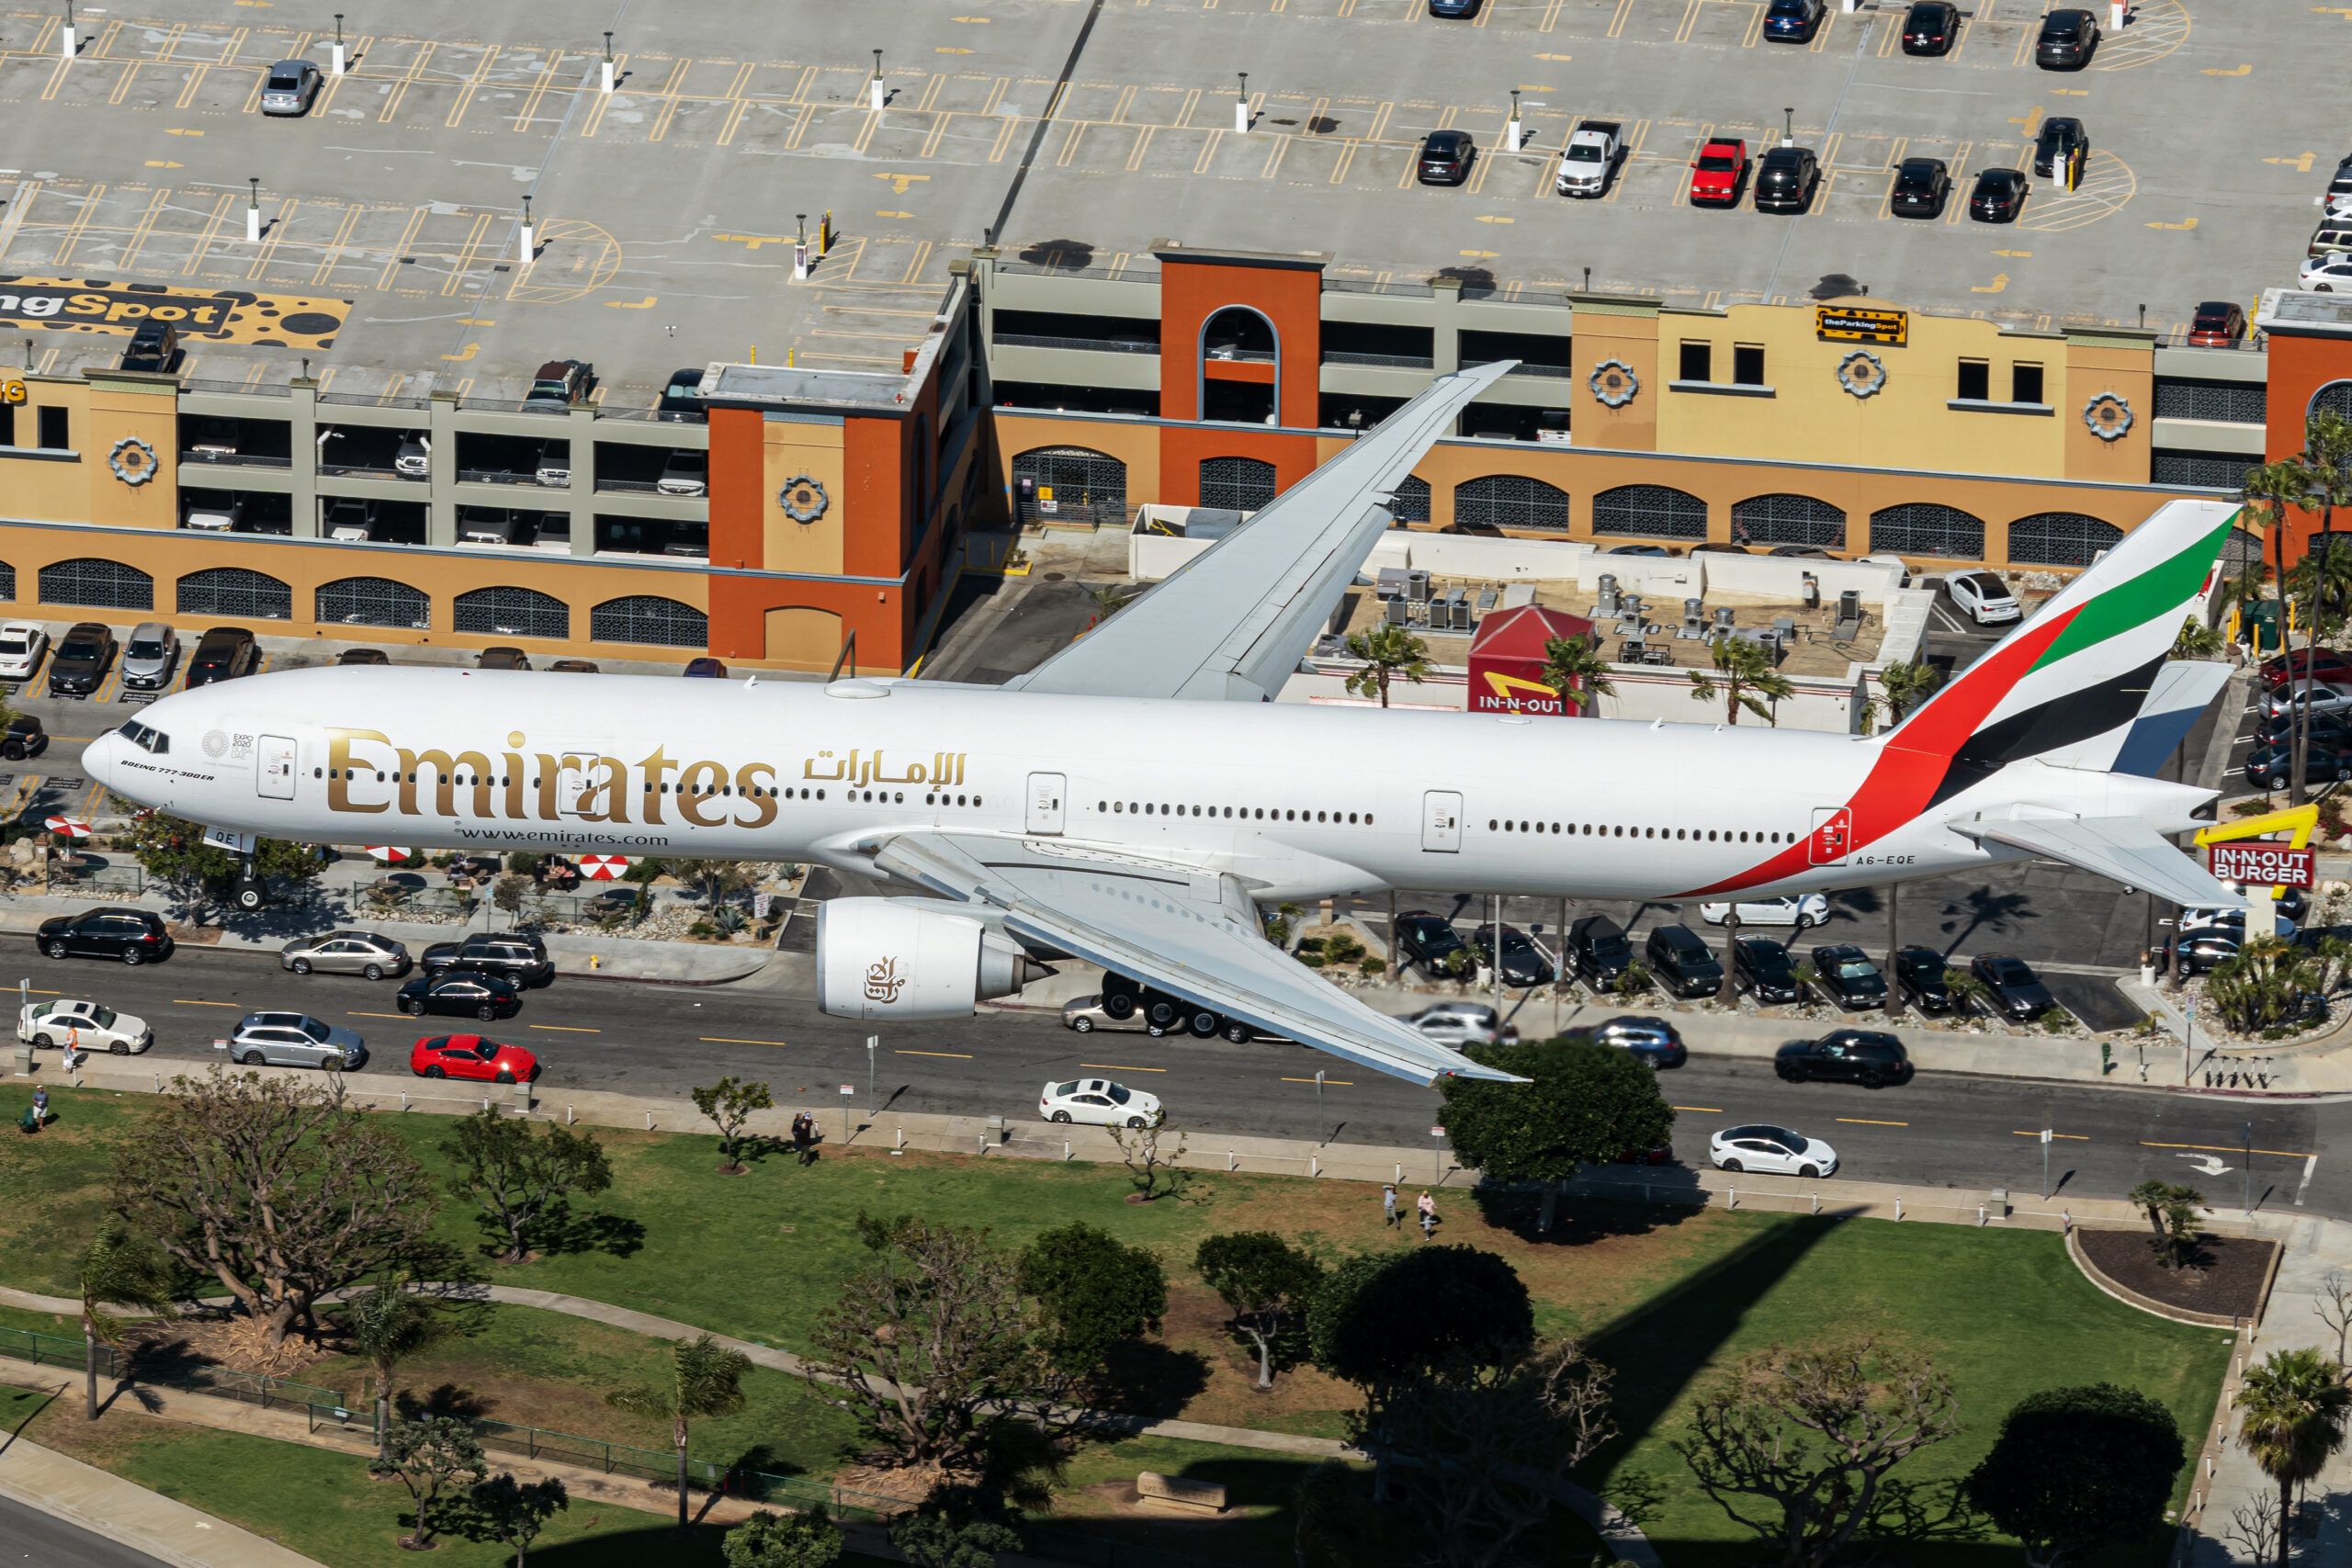 Emirates Boeing 777 landing in Los Angeles